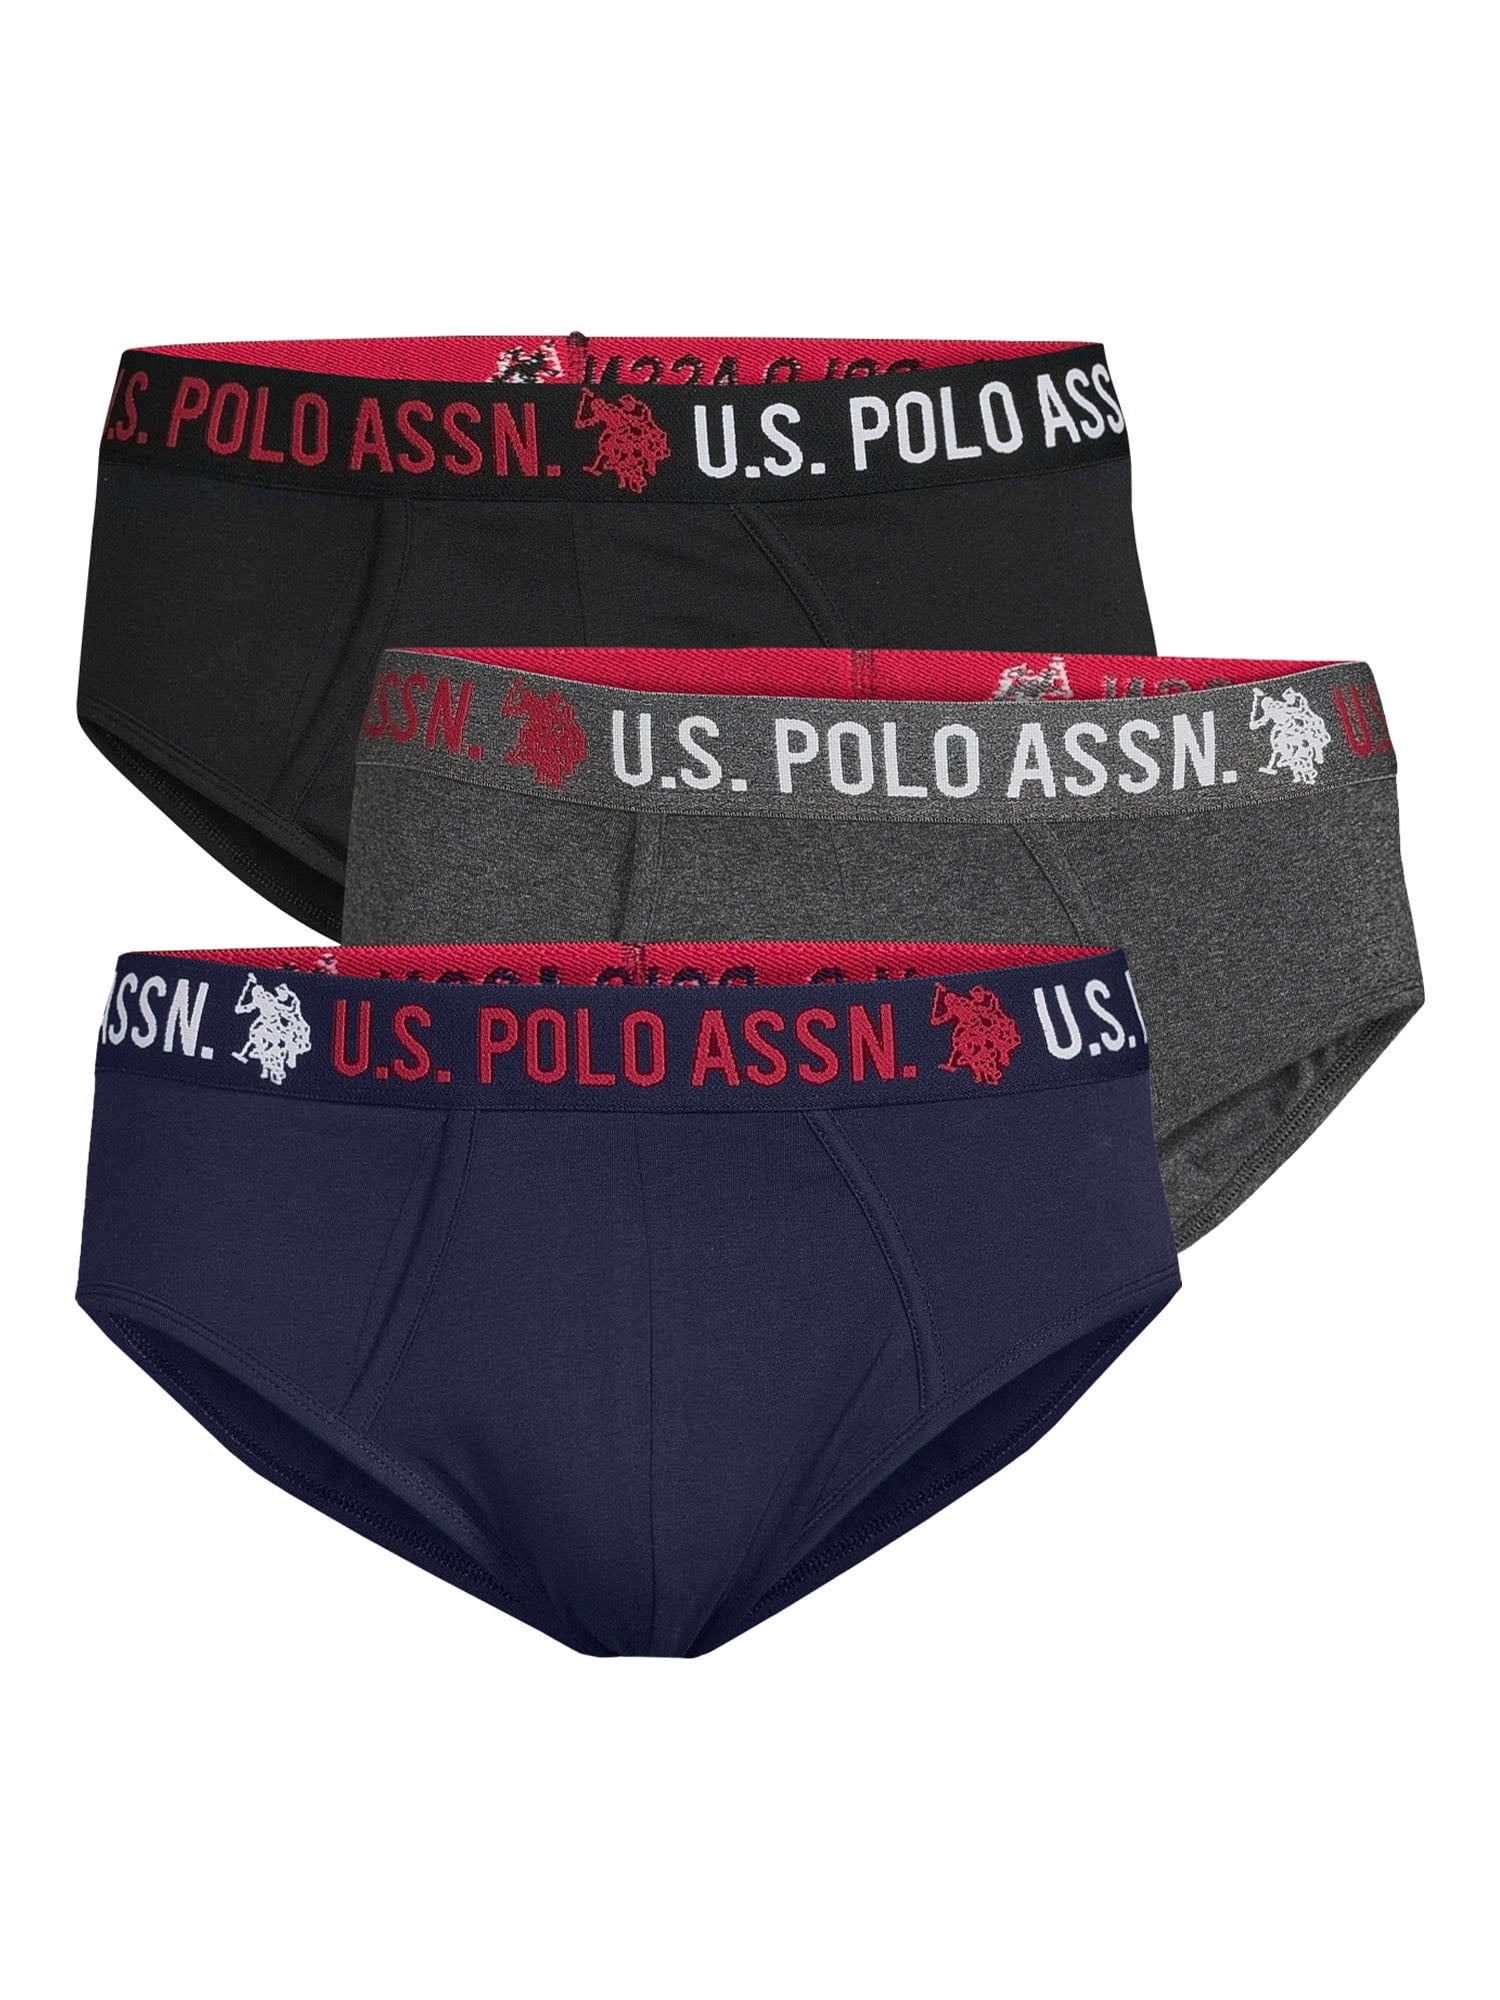 U.S. Polo Assn. Men’s Cotton Stretch Briefs, 3-Pack